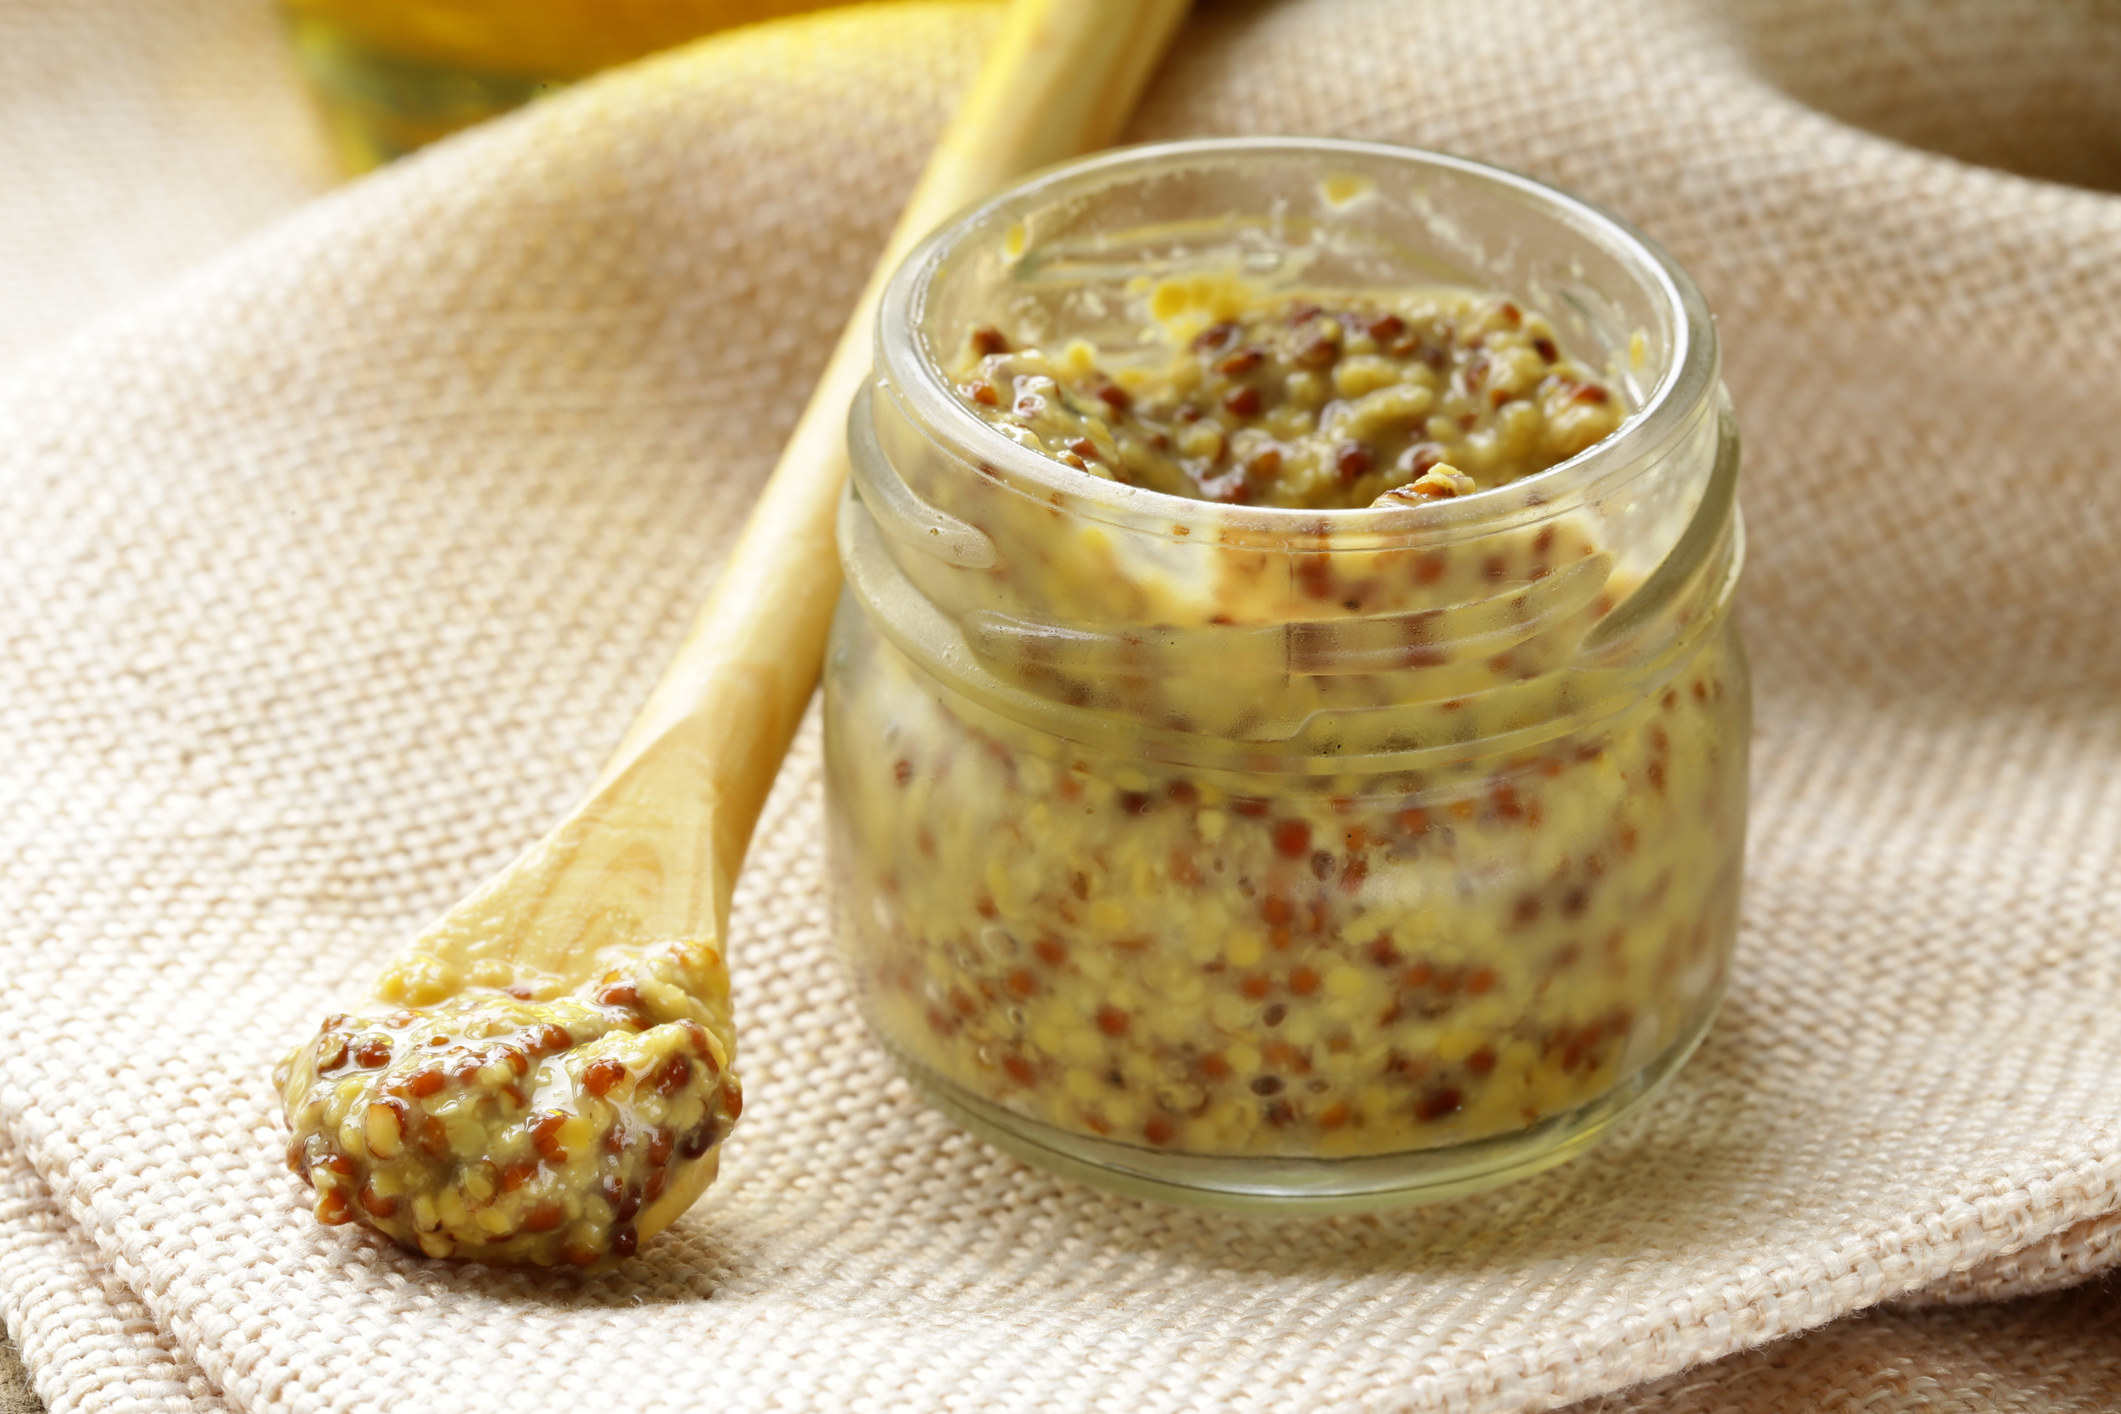 Traditional dijon mustard in a glass jar.